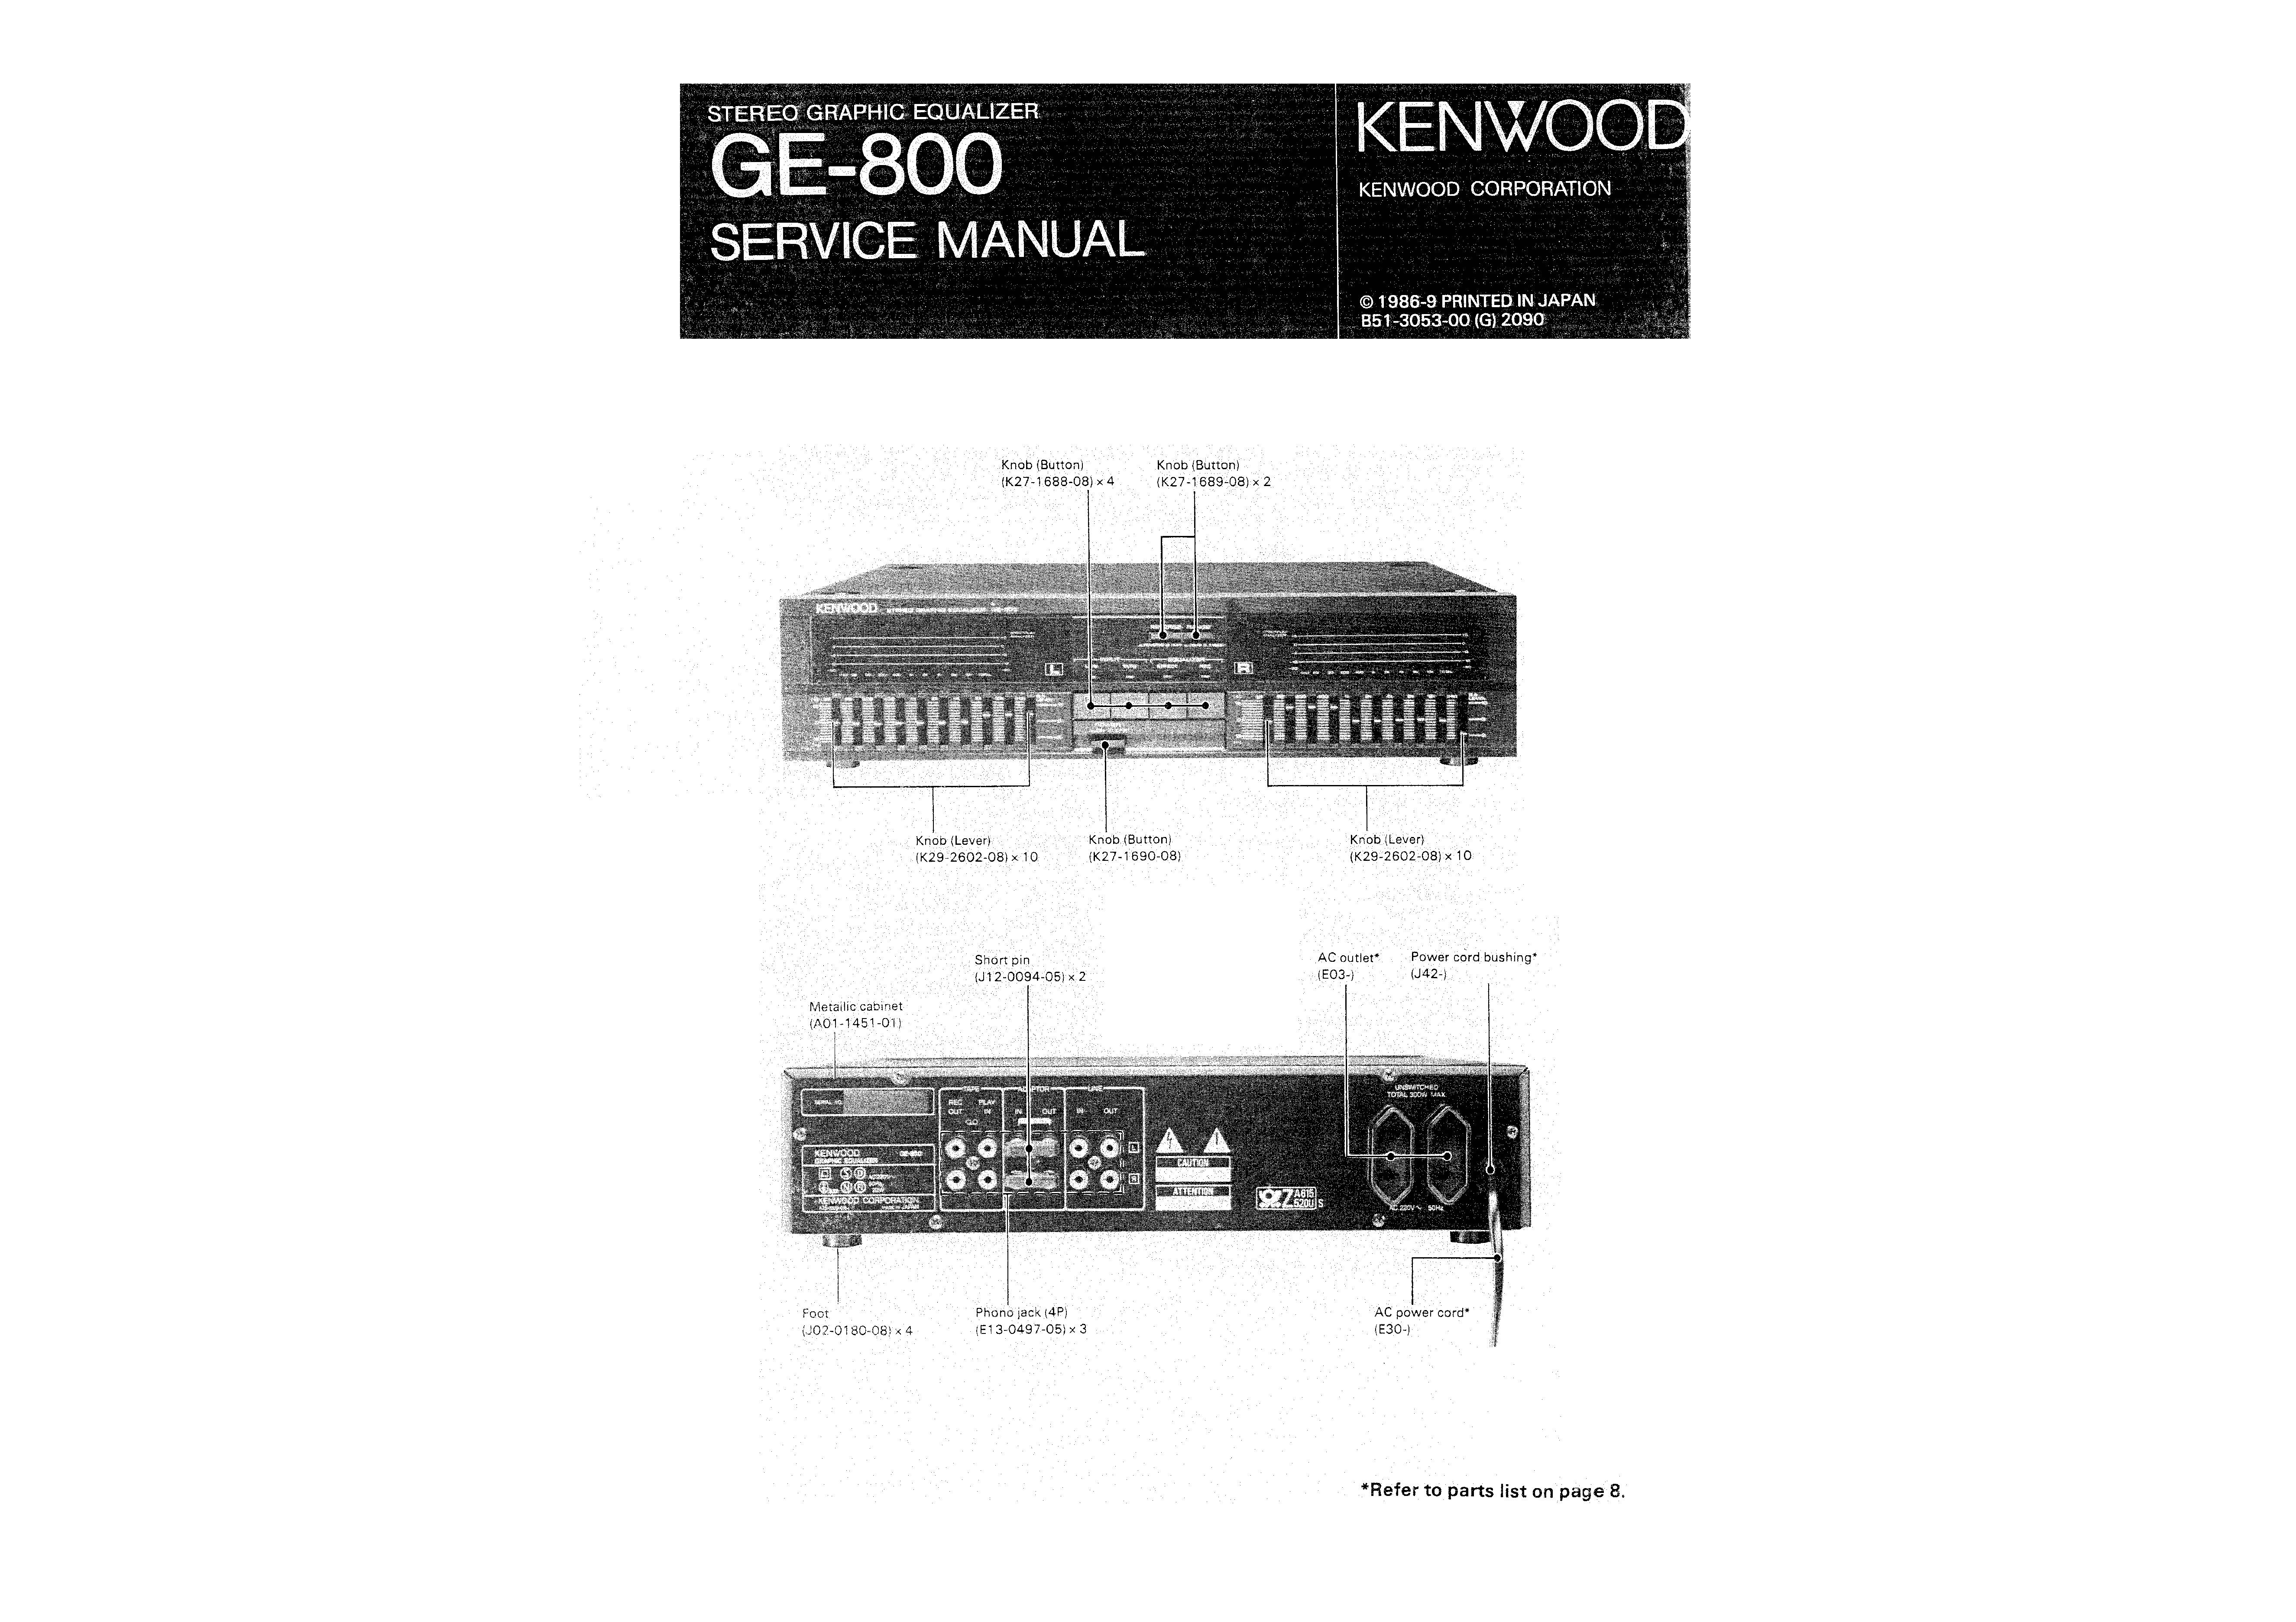 Kenwood GE-800